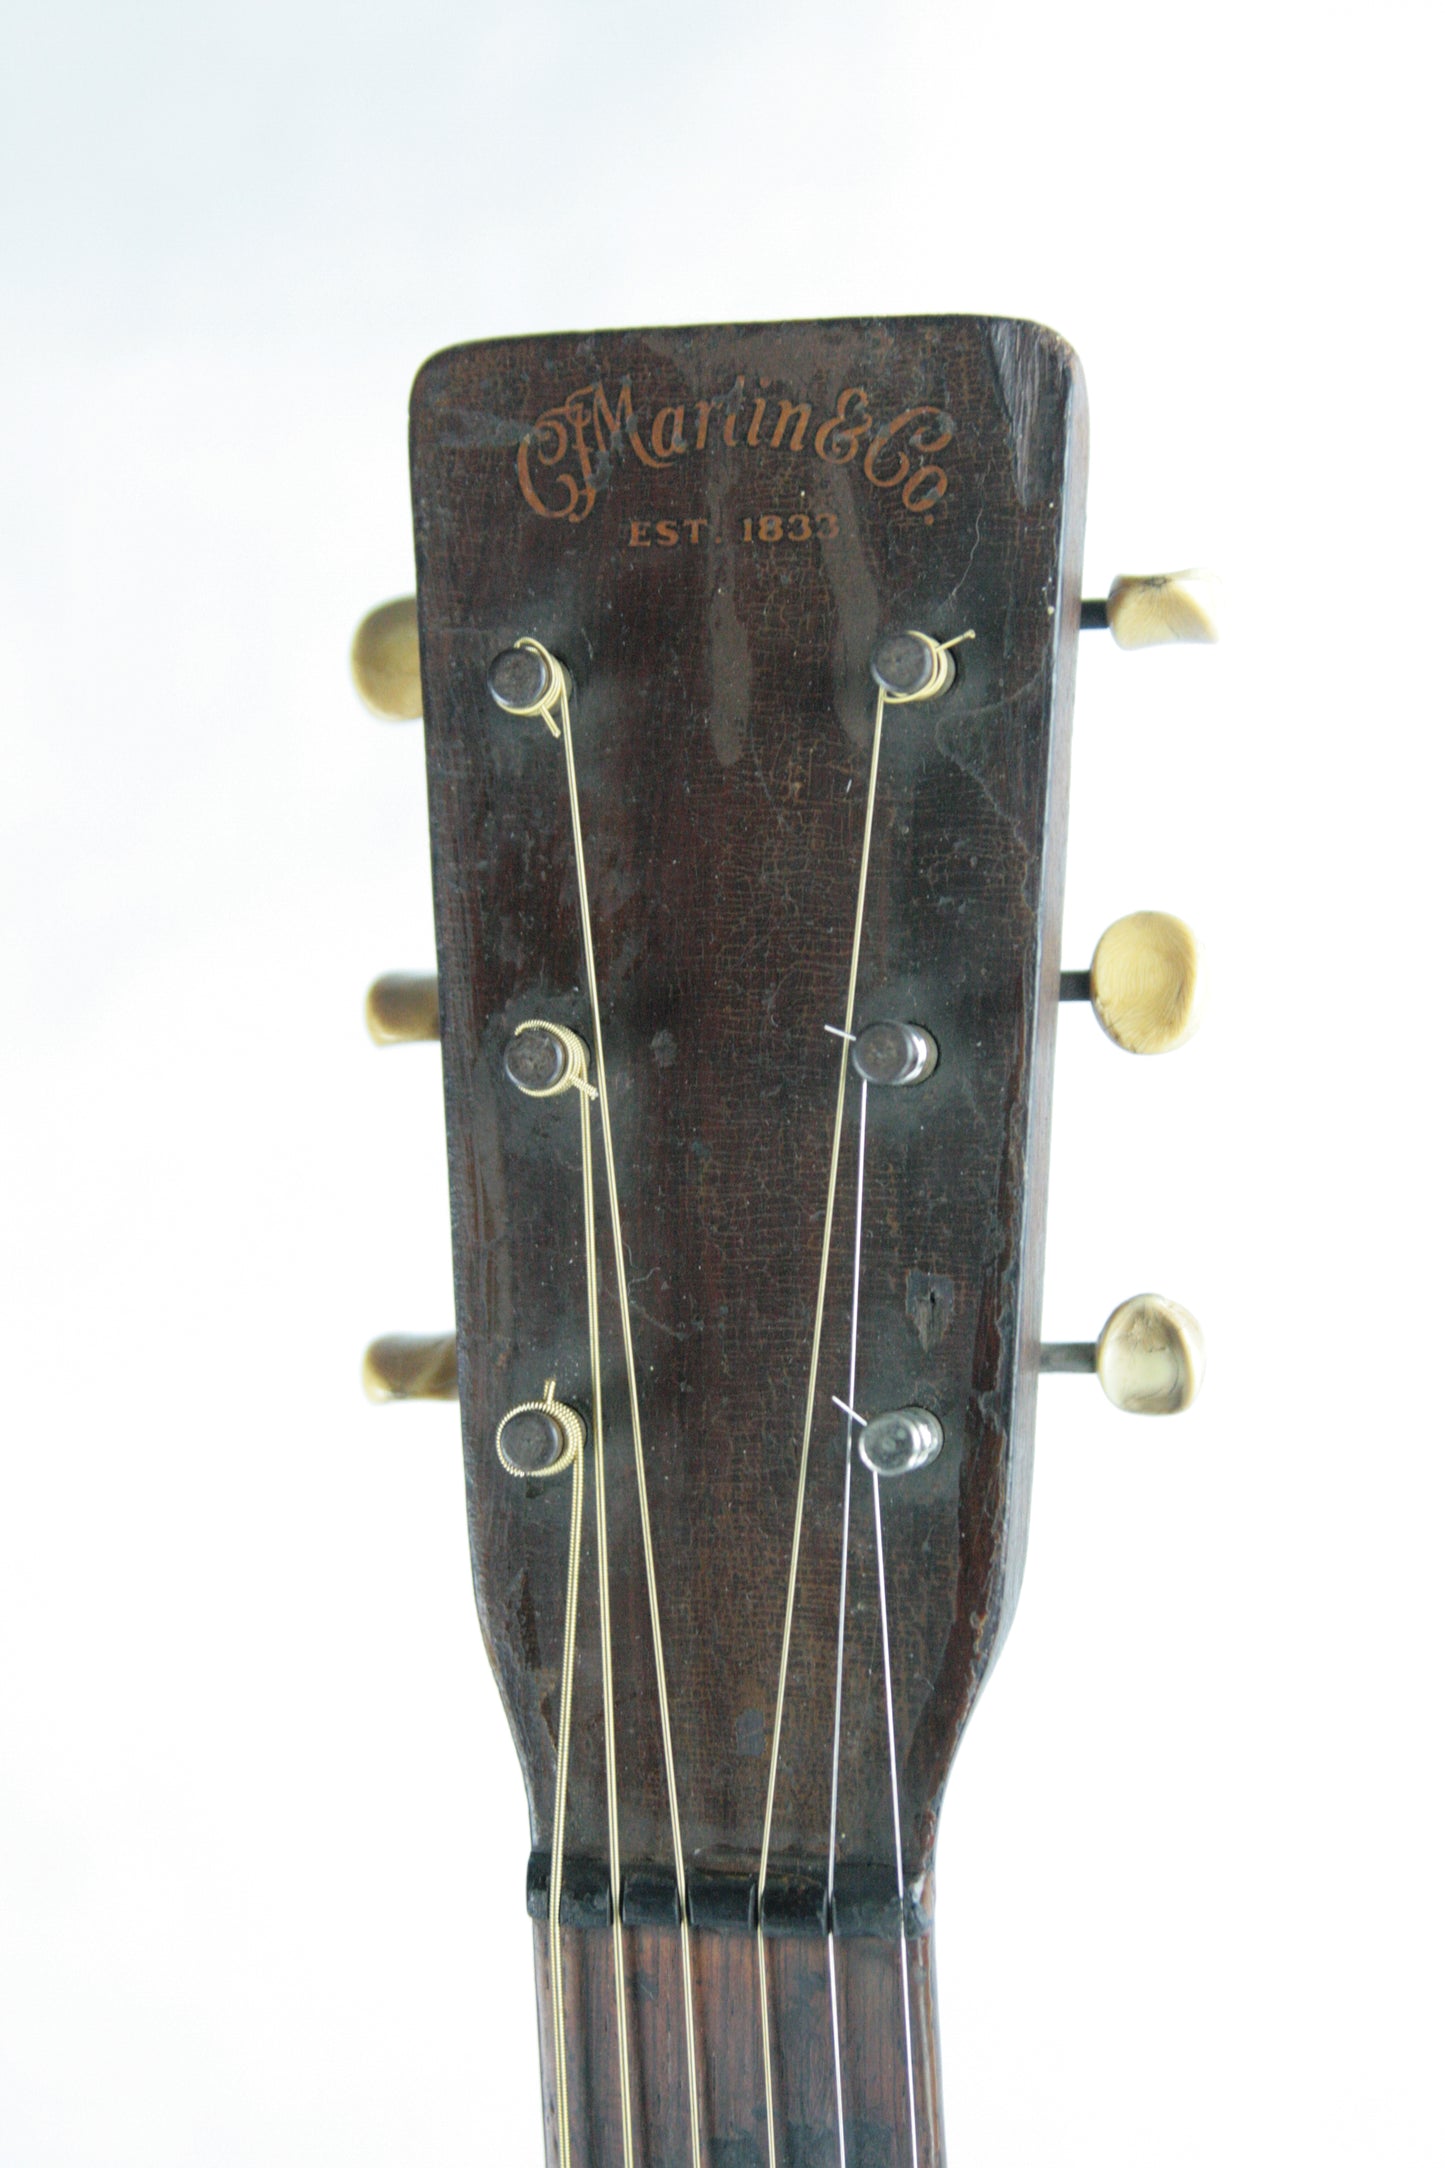 1944 Martin 0-17 Prewar Acoustic Guitar! Scalloped Bracing! All-Mahogany 00